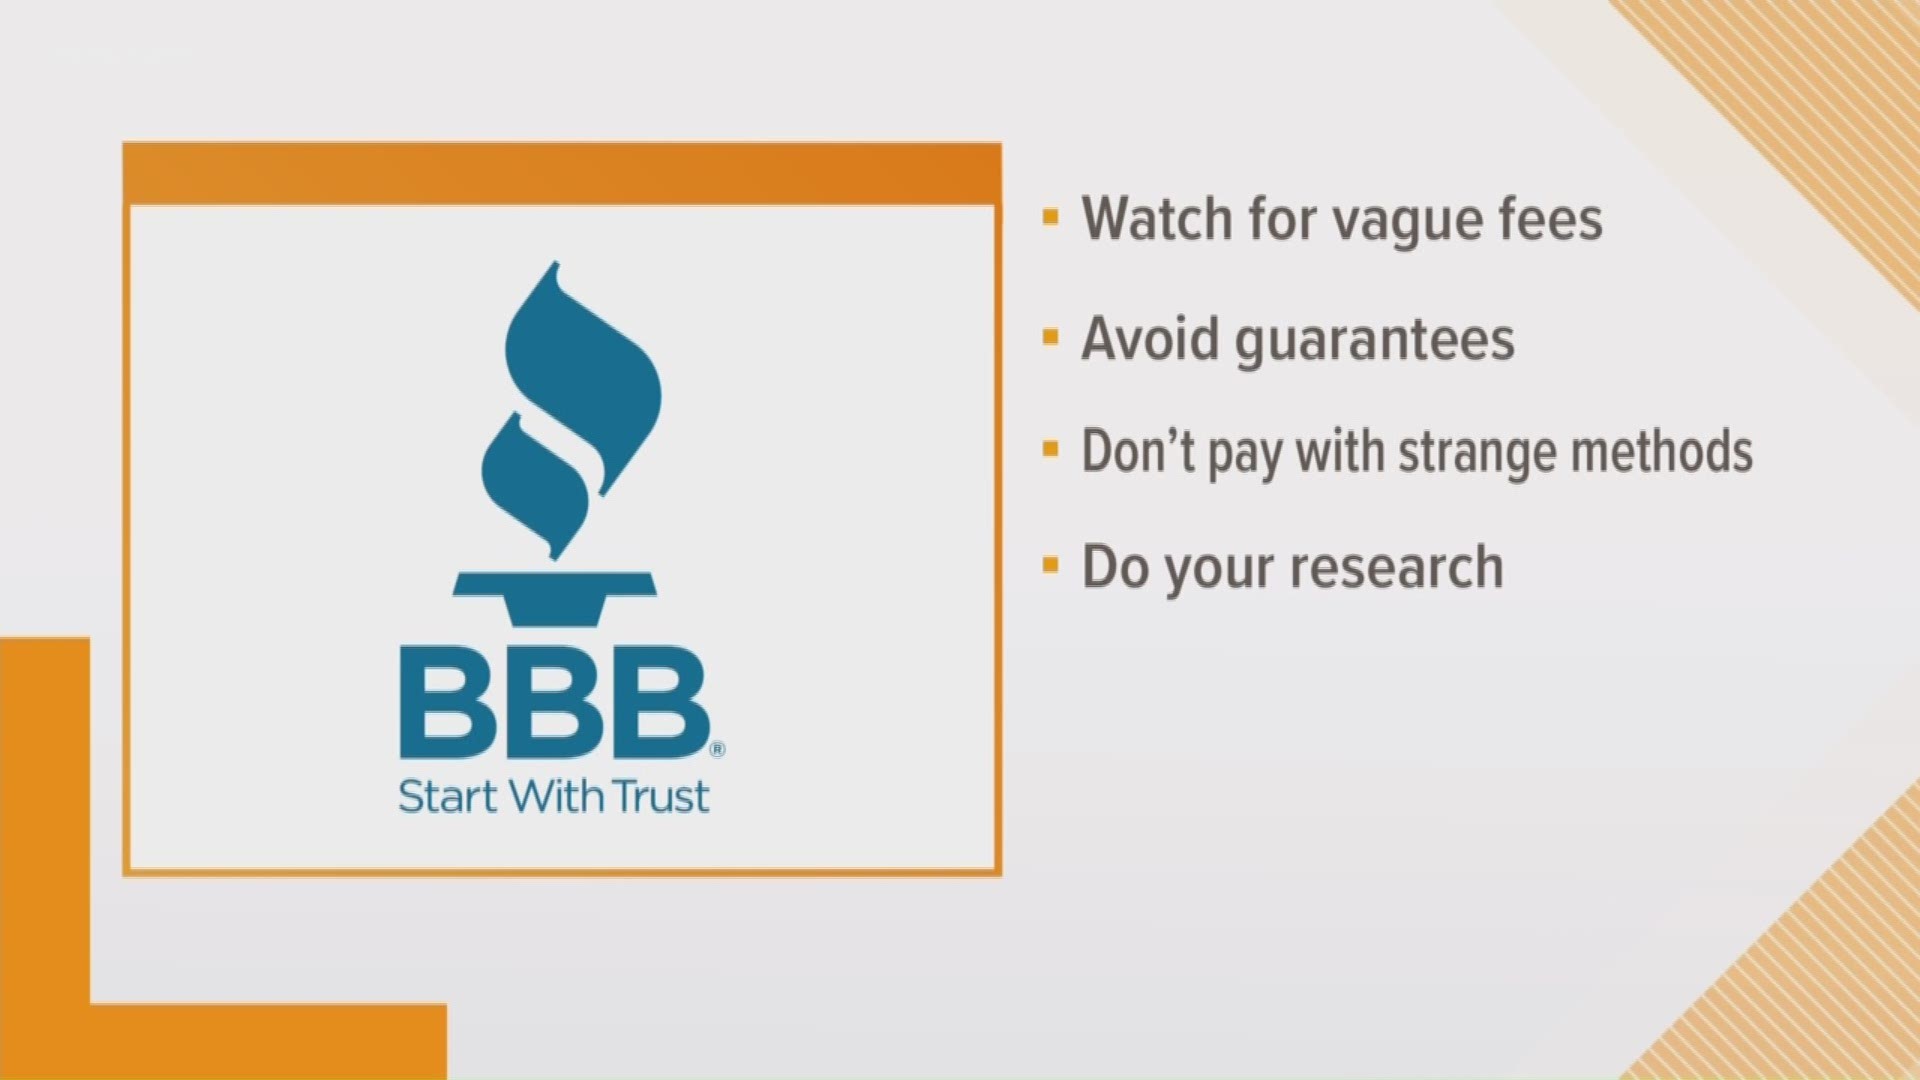 Carlos Villalobos with the Better Business Bureau gives advice on how to avoid advance fee loan scams.